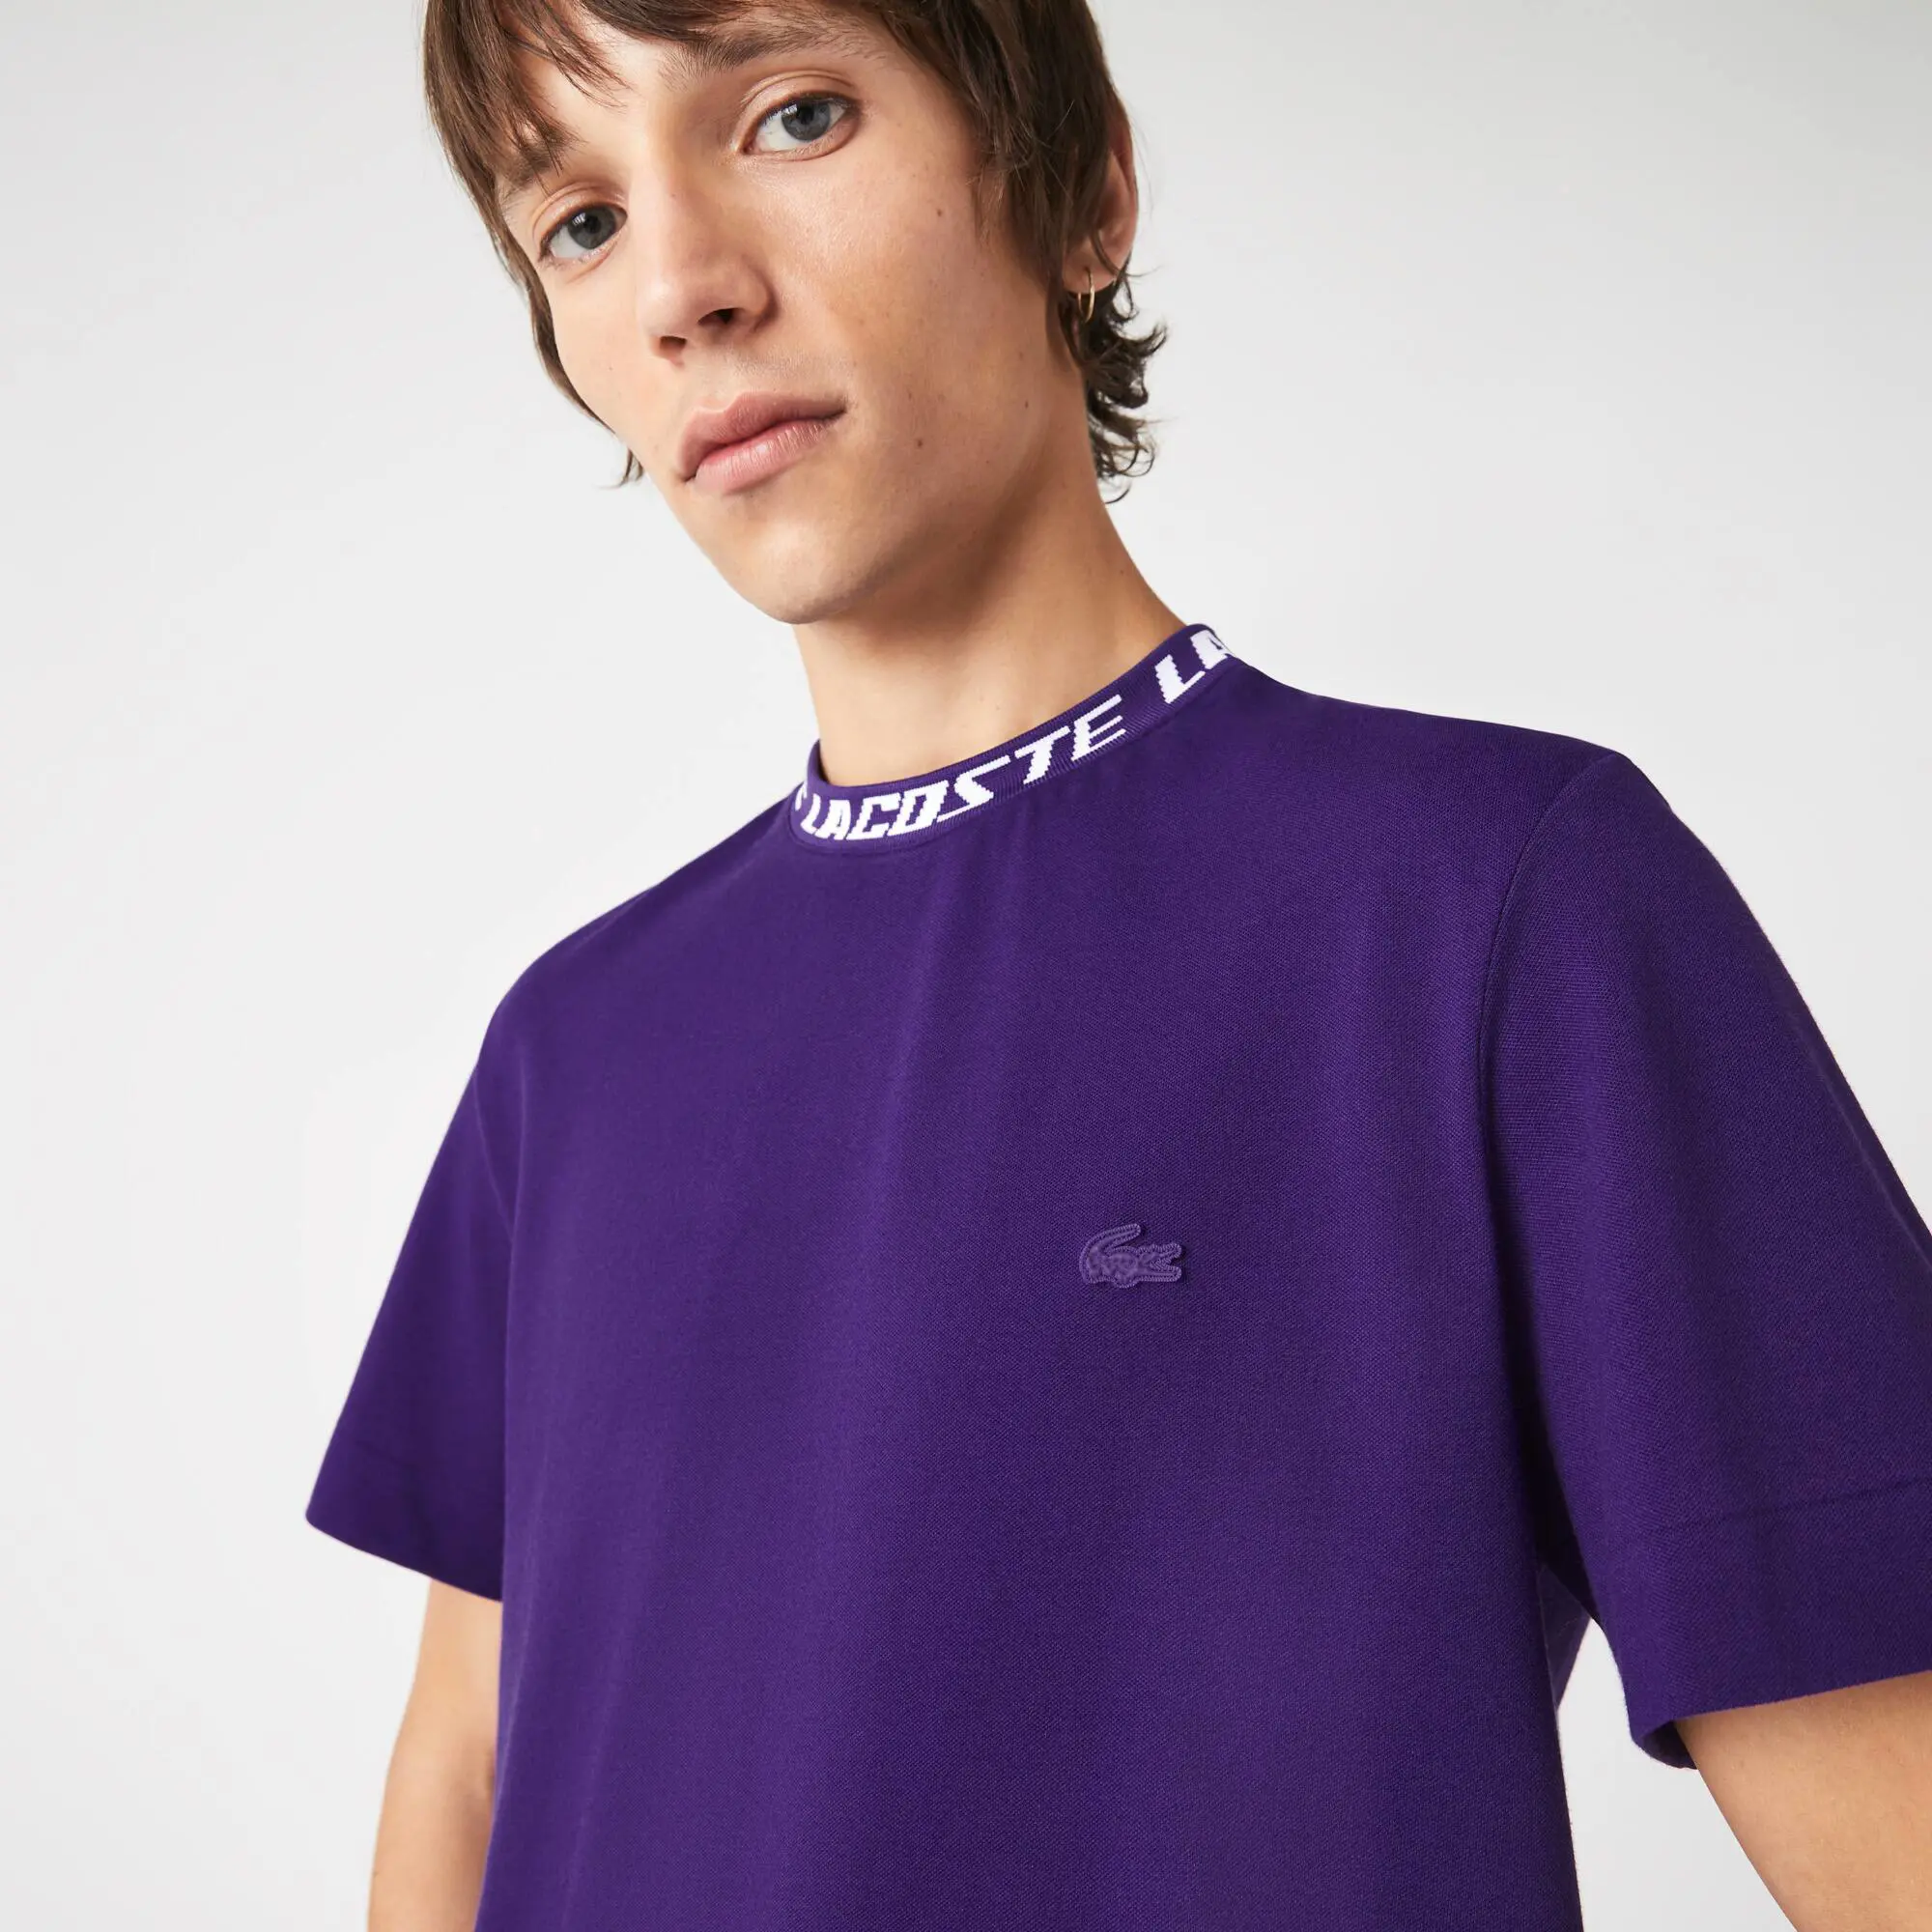 Lacoste T-shirt regular fit de gola com marca Lacoste para homem. 1